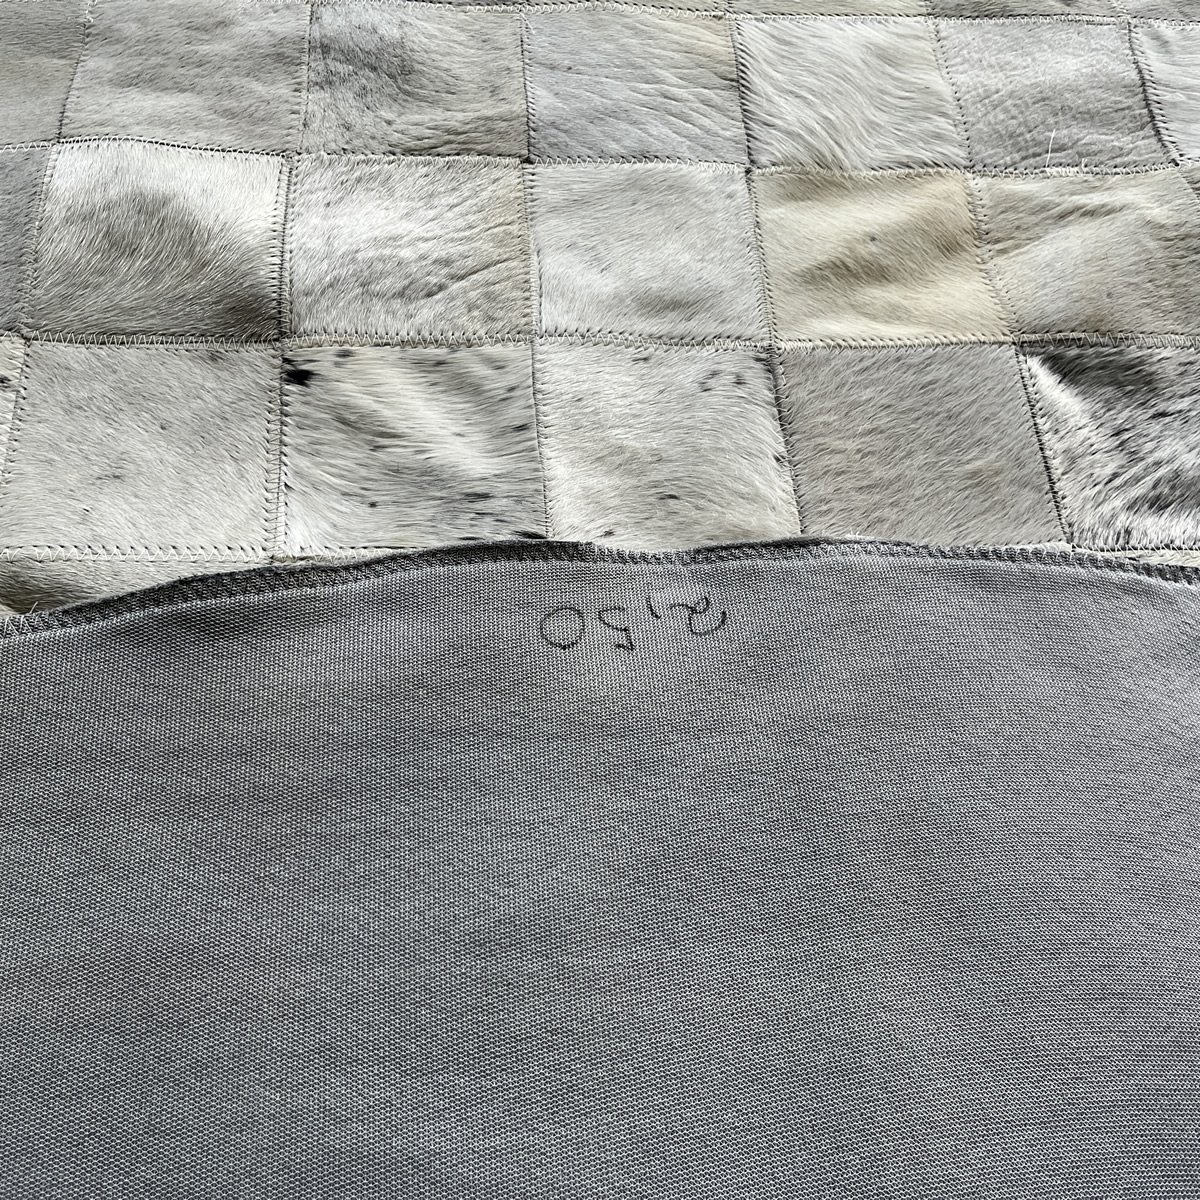 Tapete De Couro Redondo cinza griss 2,50 diâmetro peça 10x10 - 2